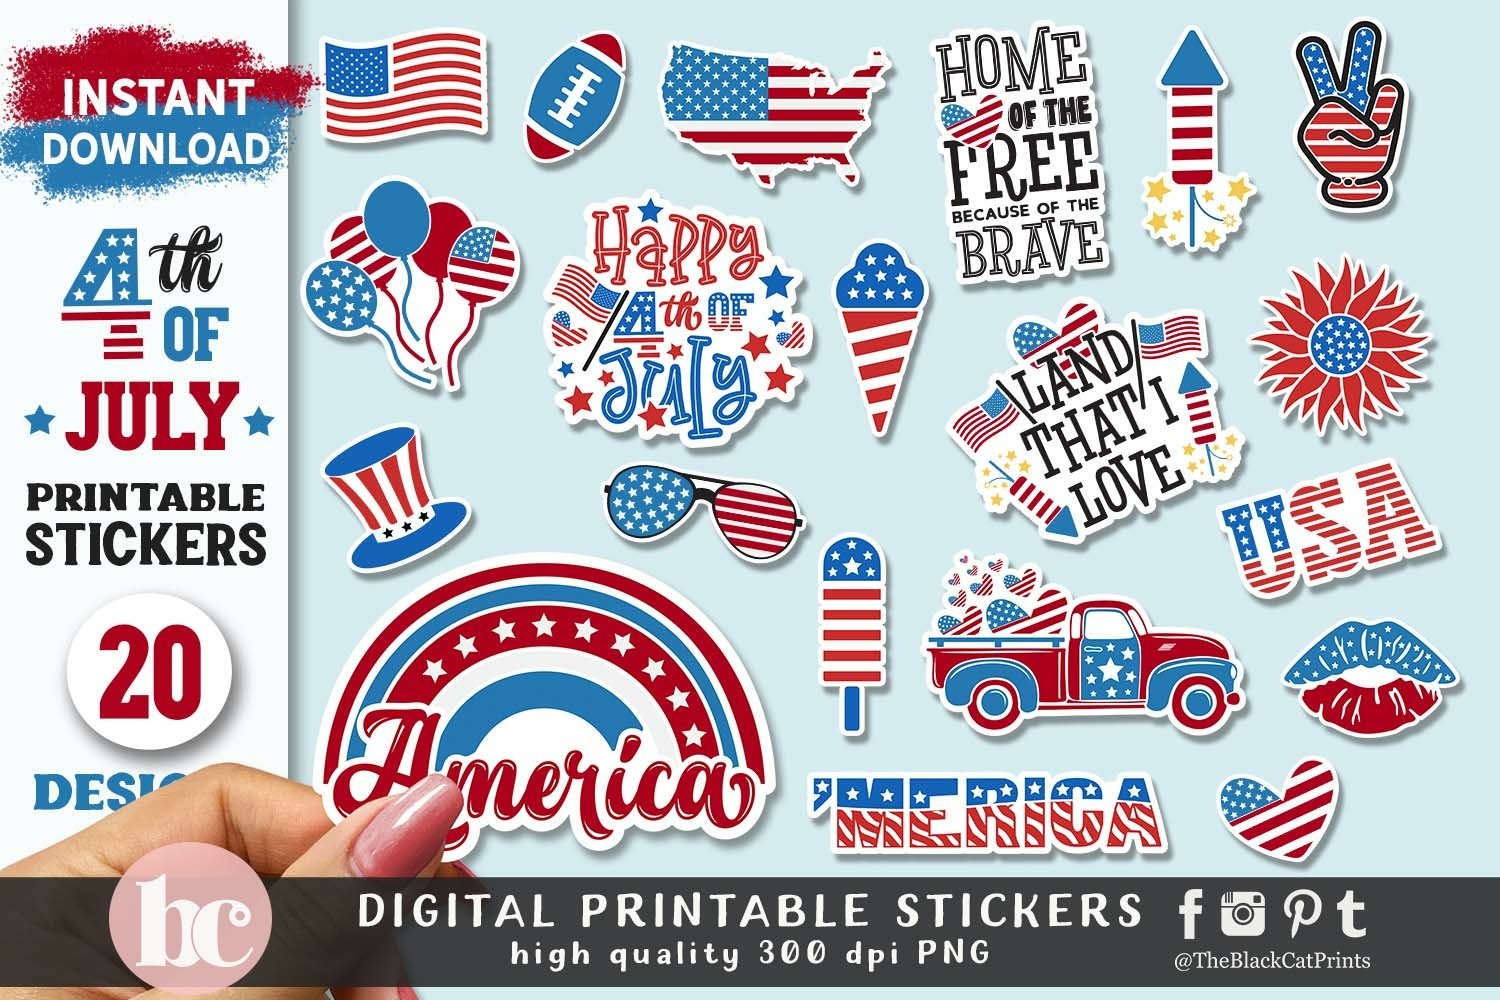 Digital printable stickers.